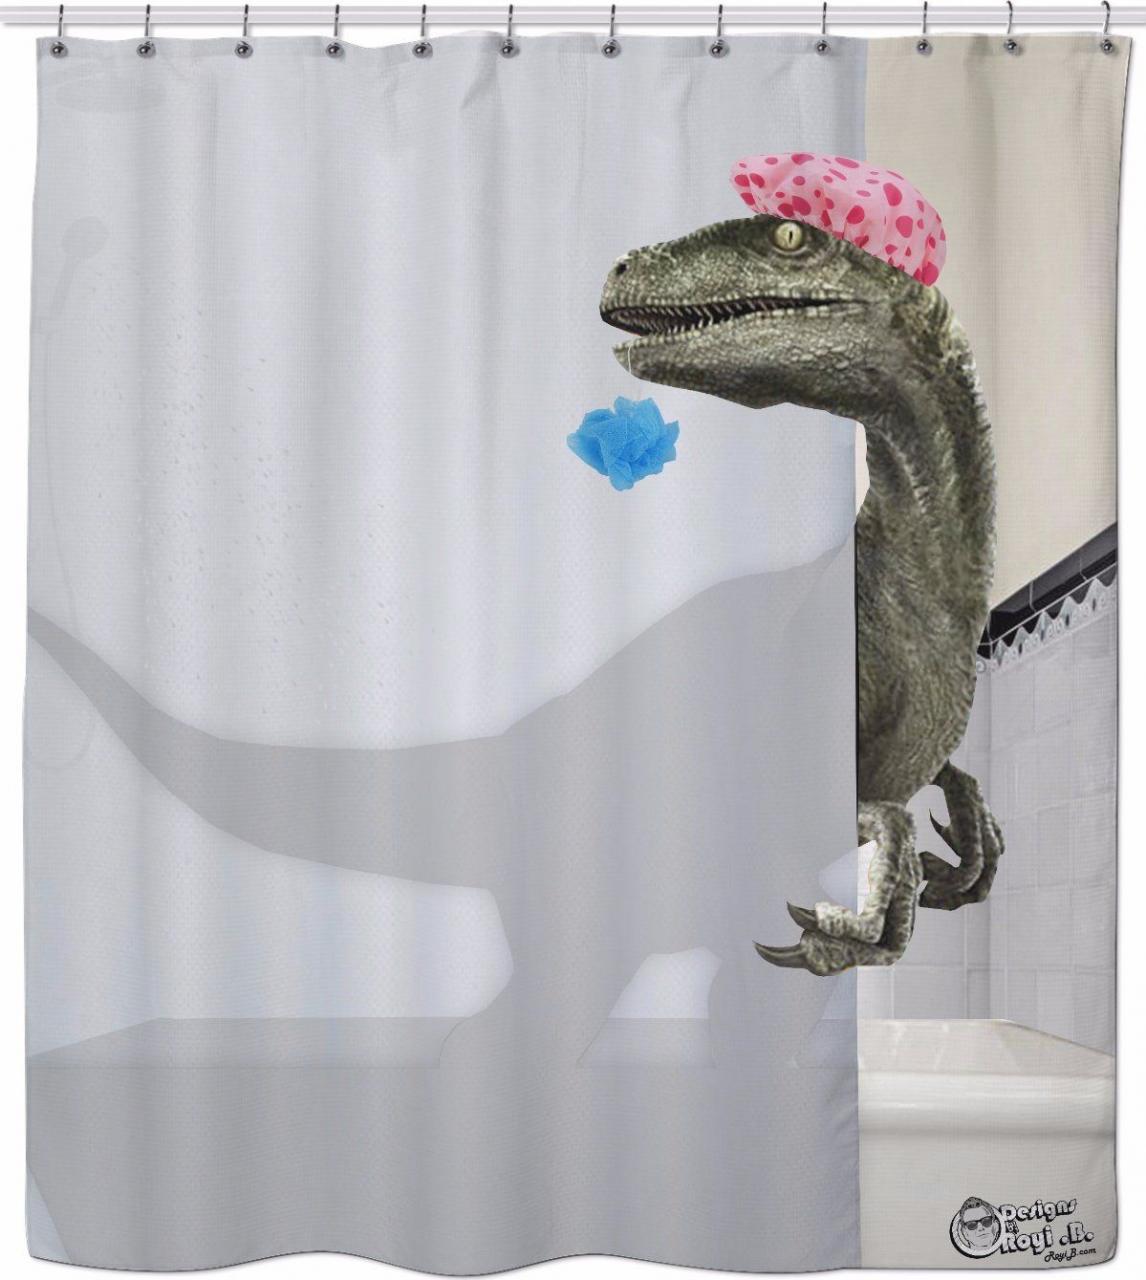 Velociraptor Shower Curtain Funny shower curtains, Bathroom shower